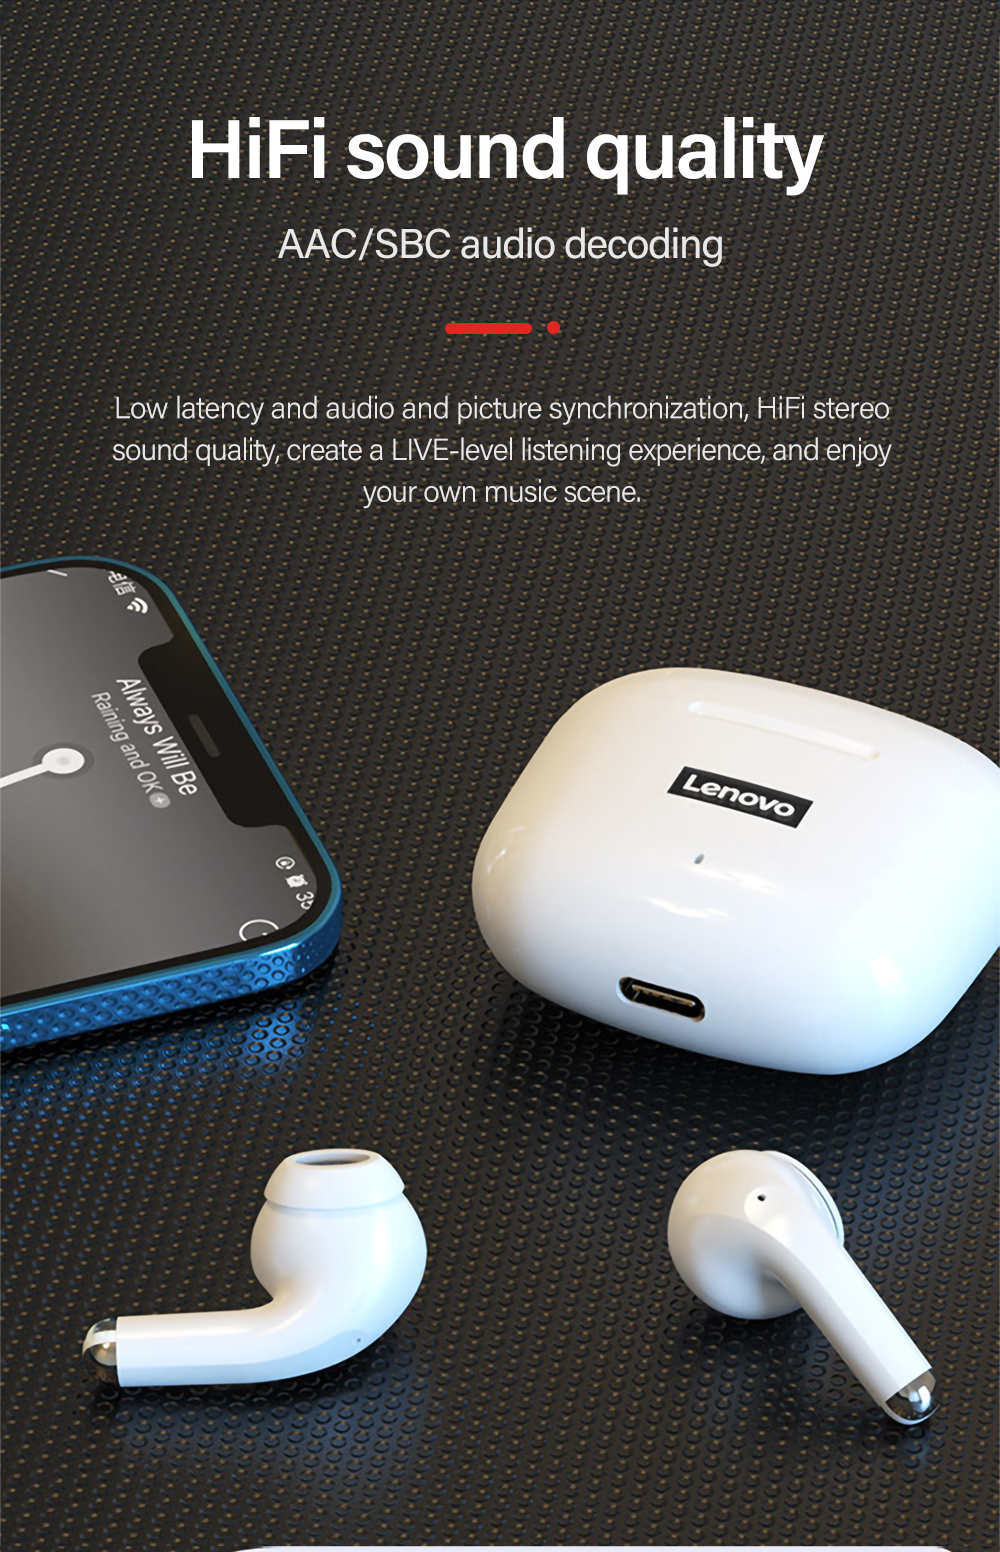 New-Lenovo-LP40-TWS-bluetooth-51-Earphone-Wireless-Earbuds-HiFi-Stereo-Bass-ENC-Noise-Reduction-Type-1894221-4